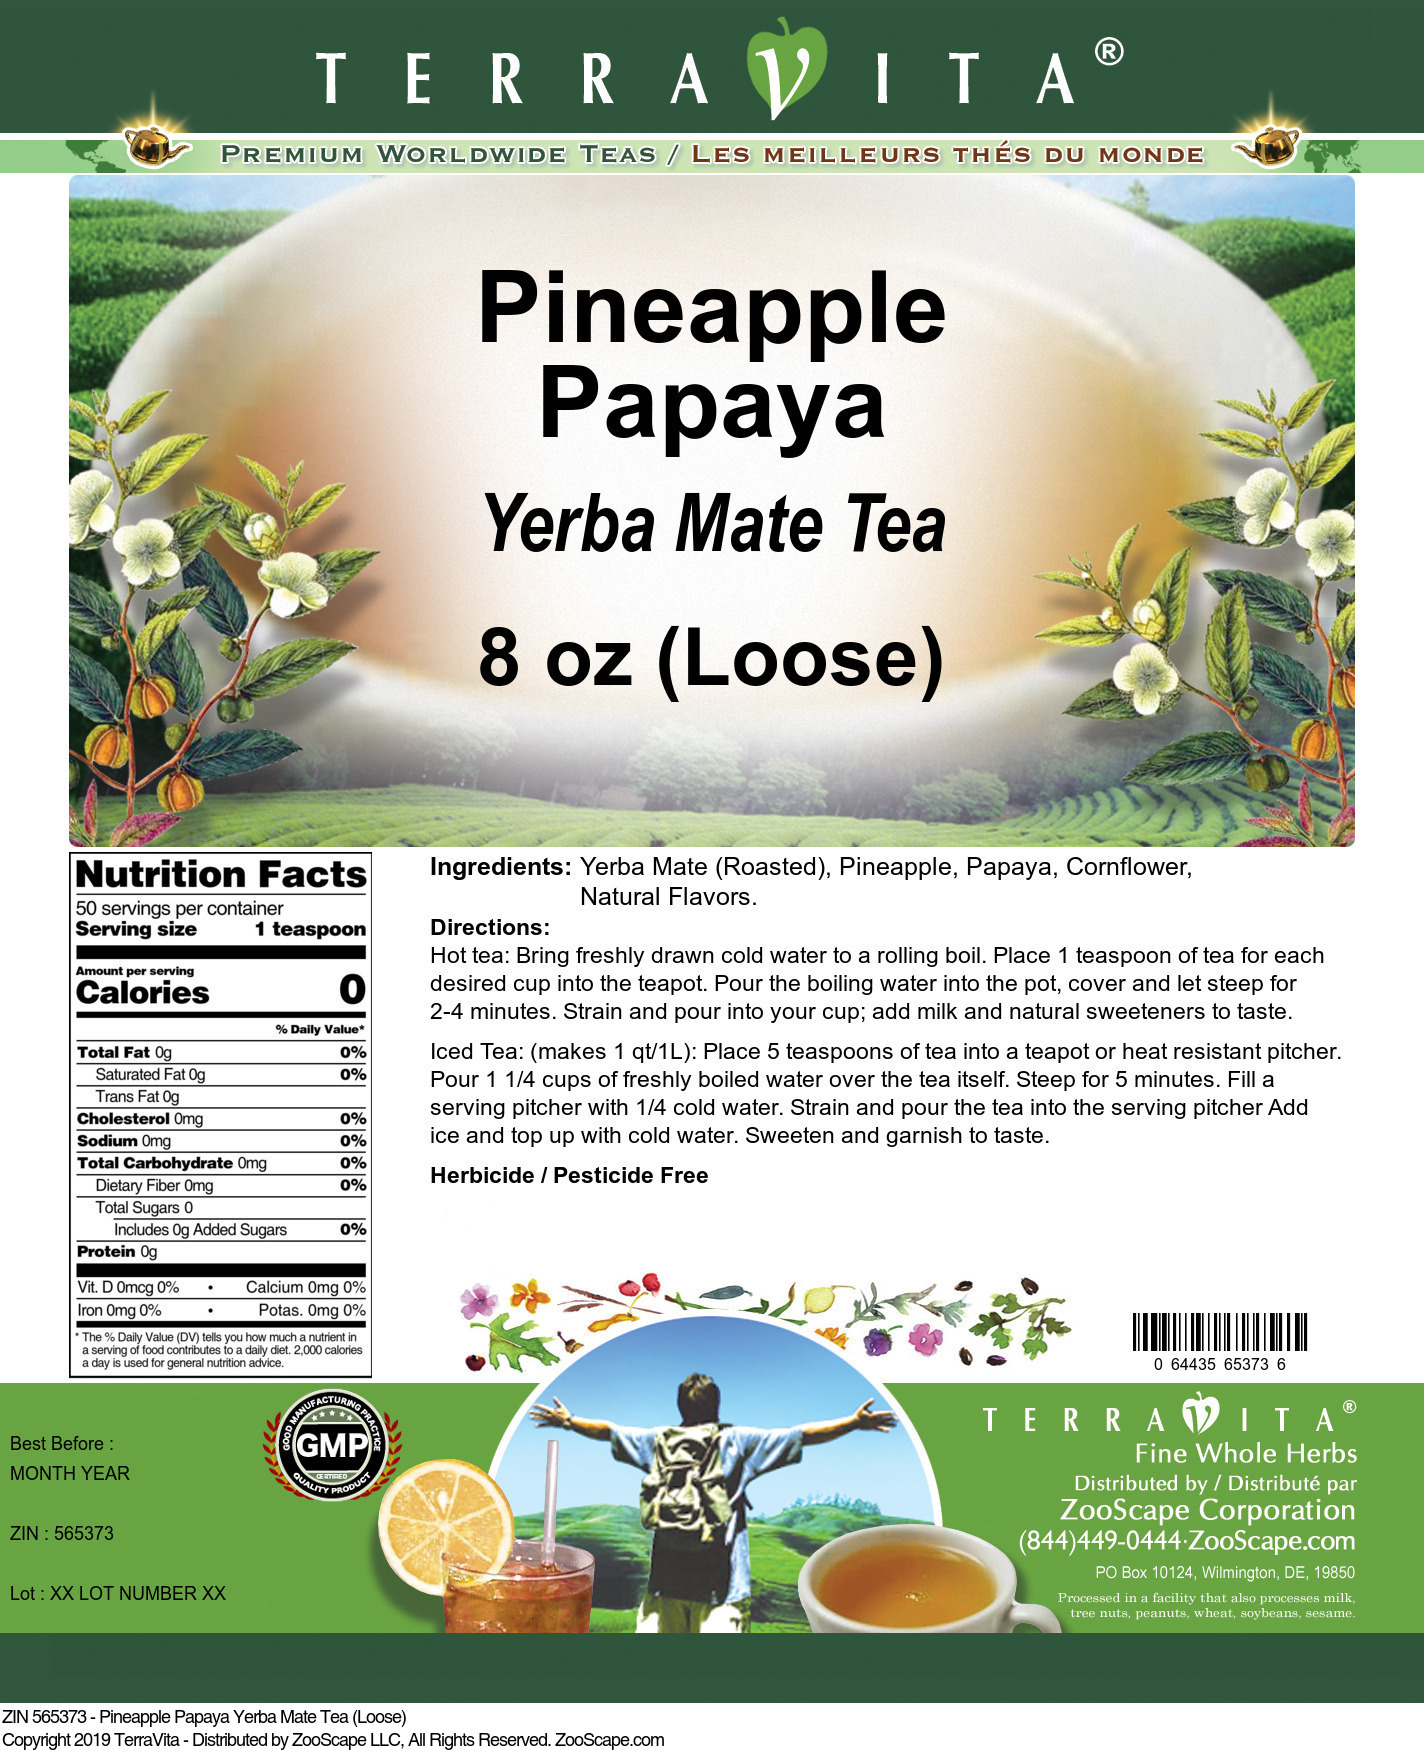 Pineapple Papaya Yerba Mate Tea (Loose) - Label